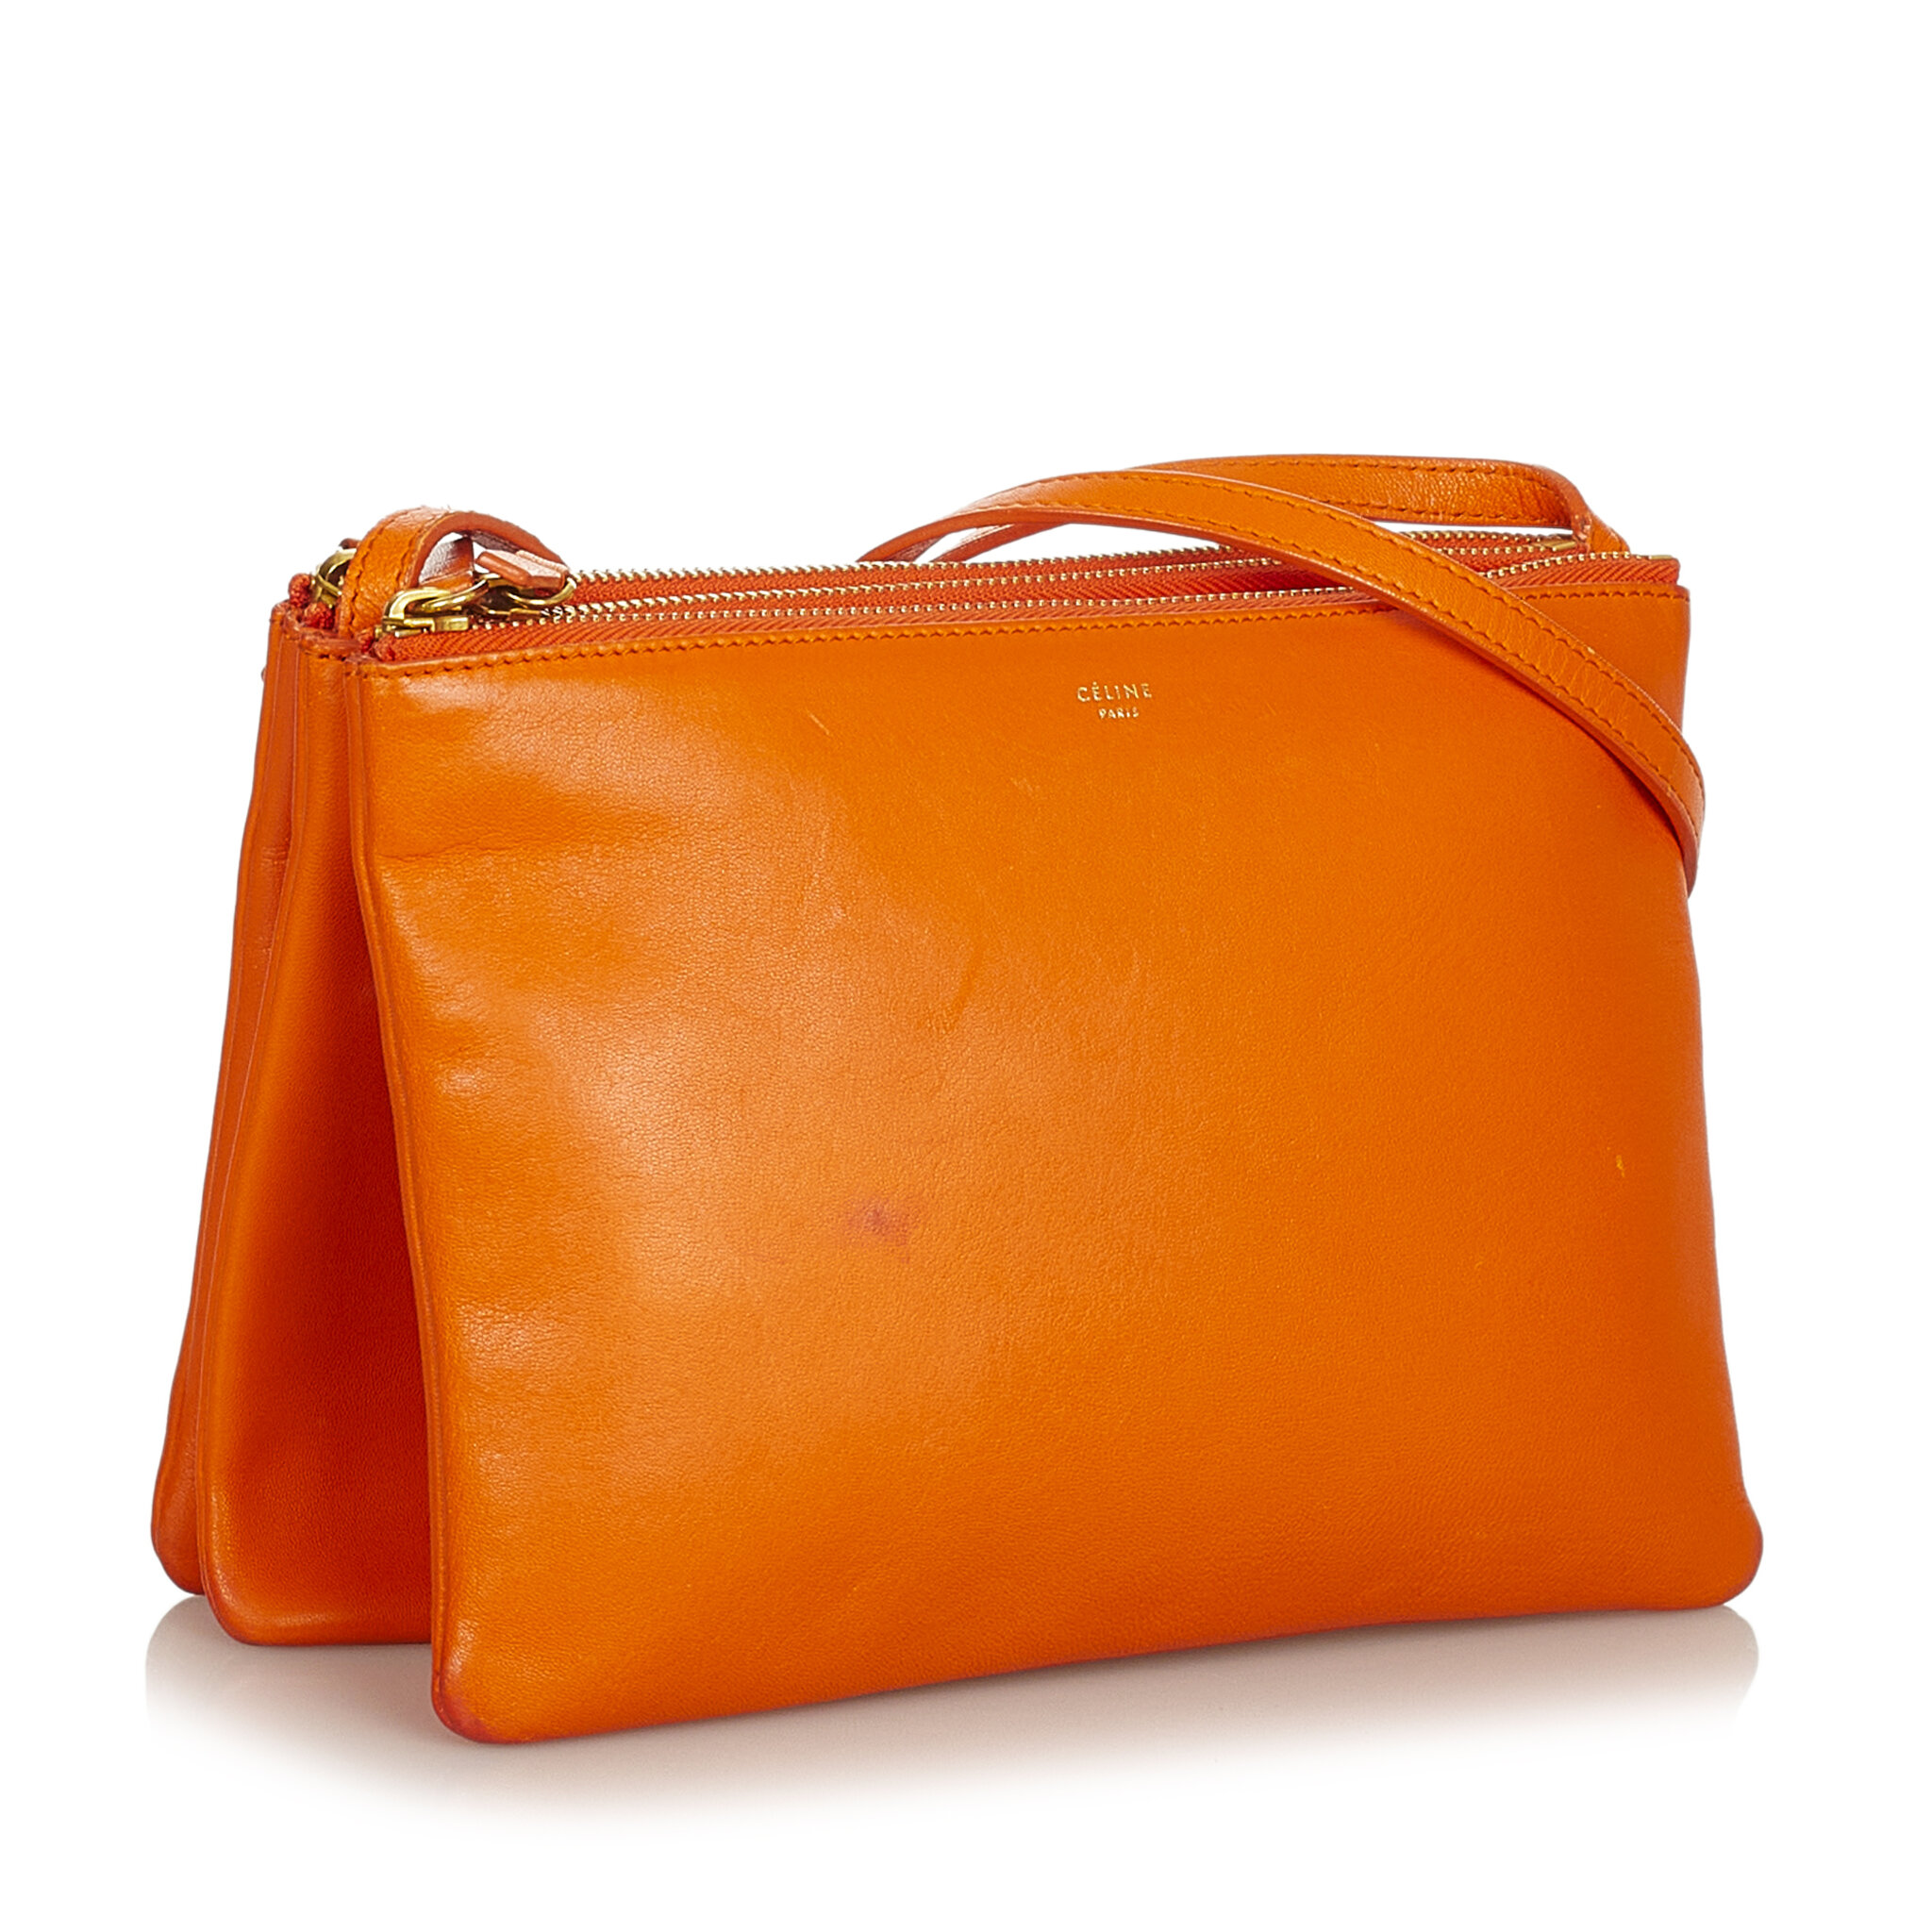 Celine Trio Leather Crossbody Bag, ONESIZE, orange